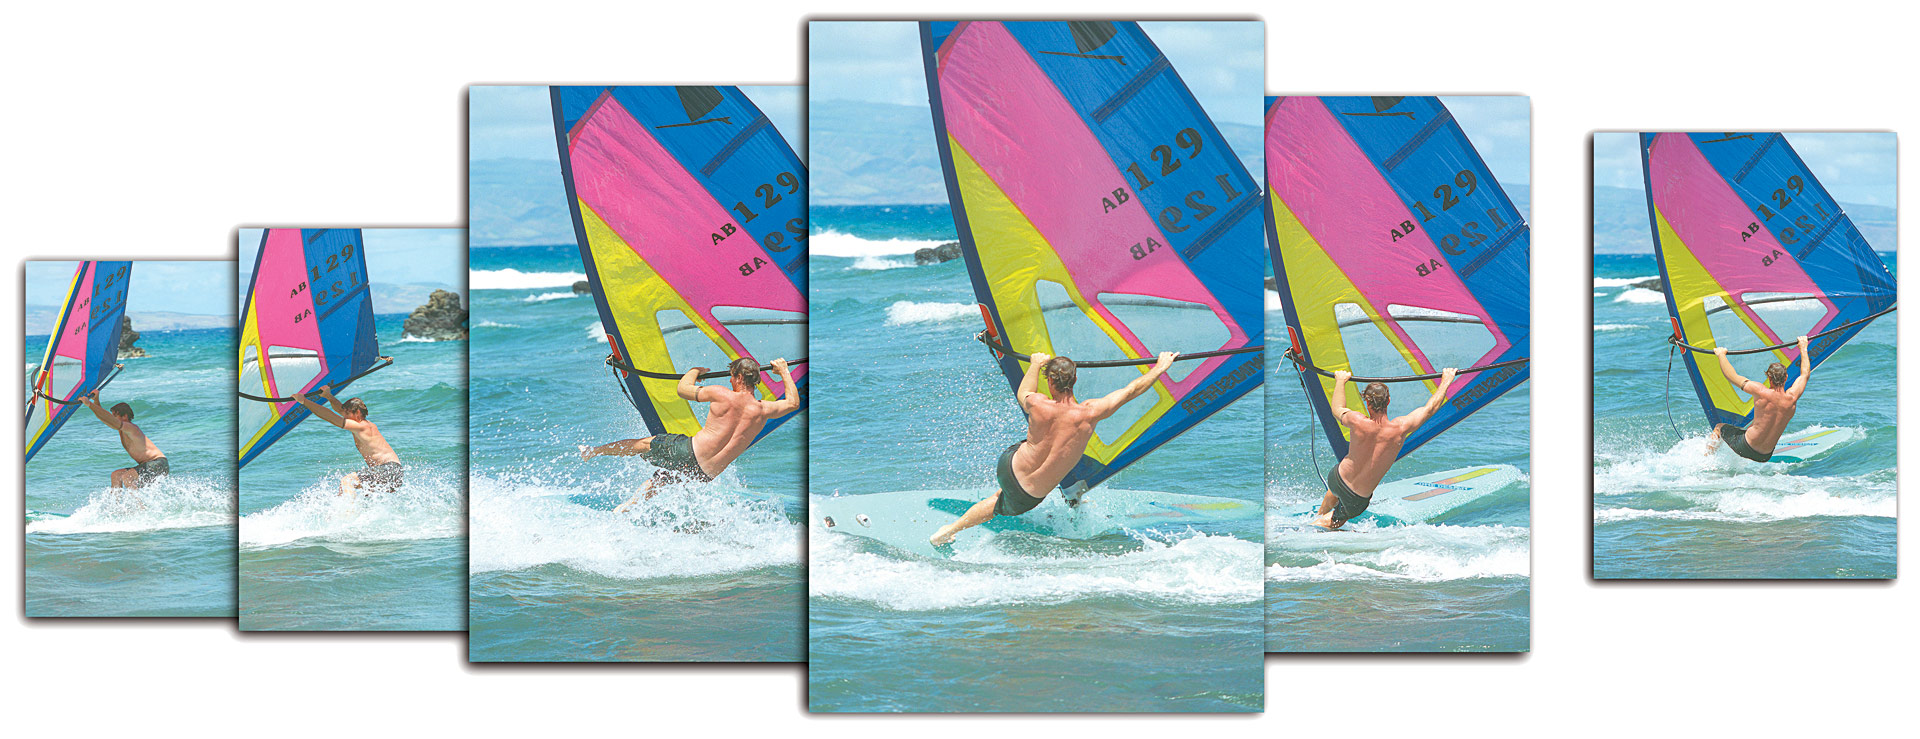 american_windsurfer_4.4_matt_jibe-layers